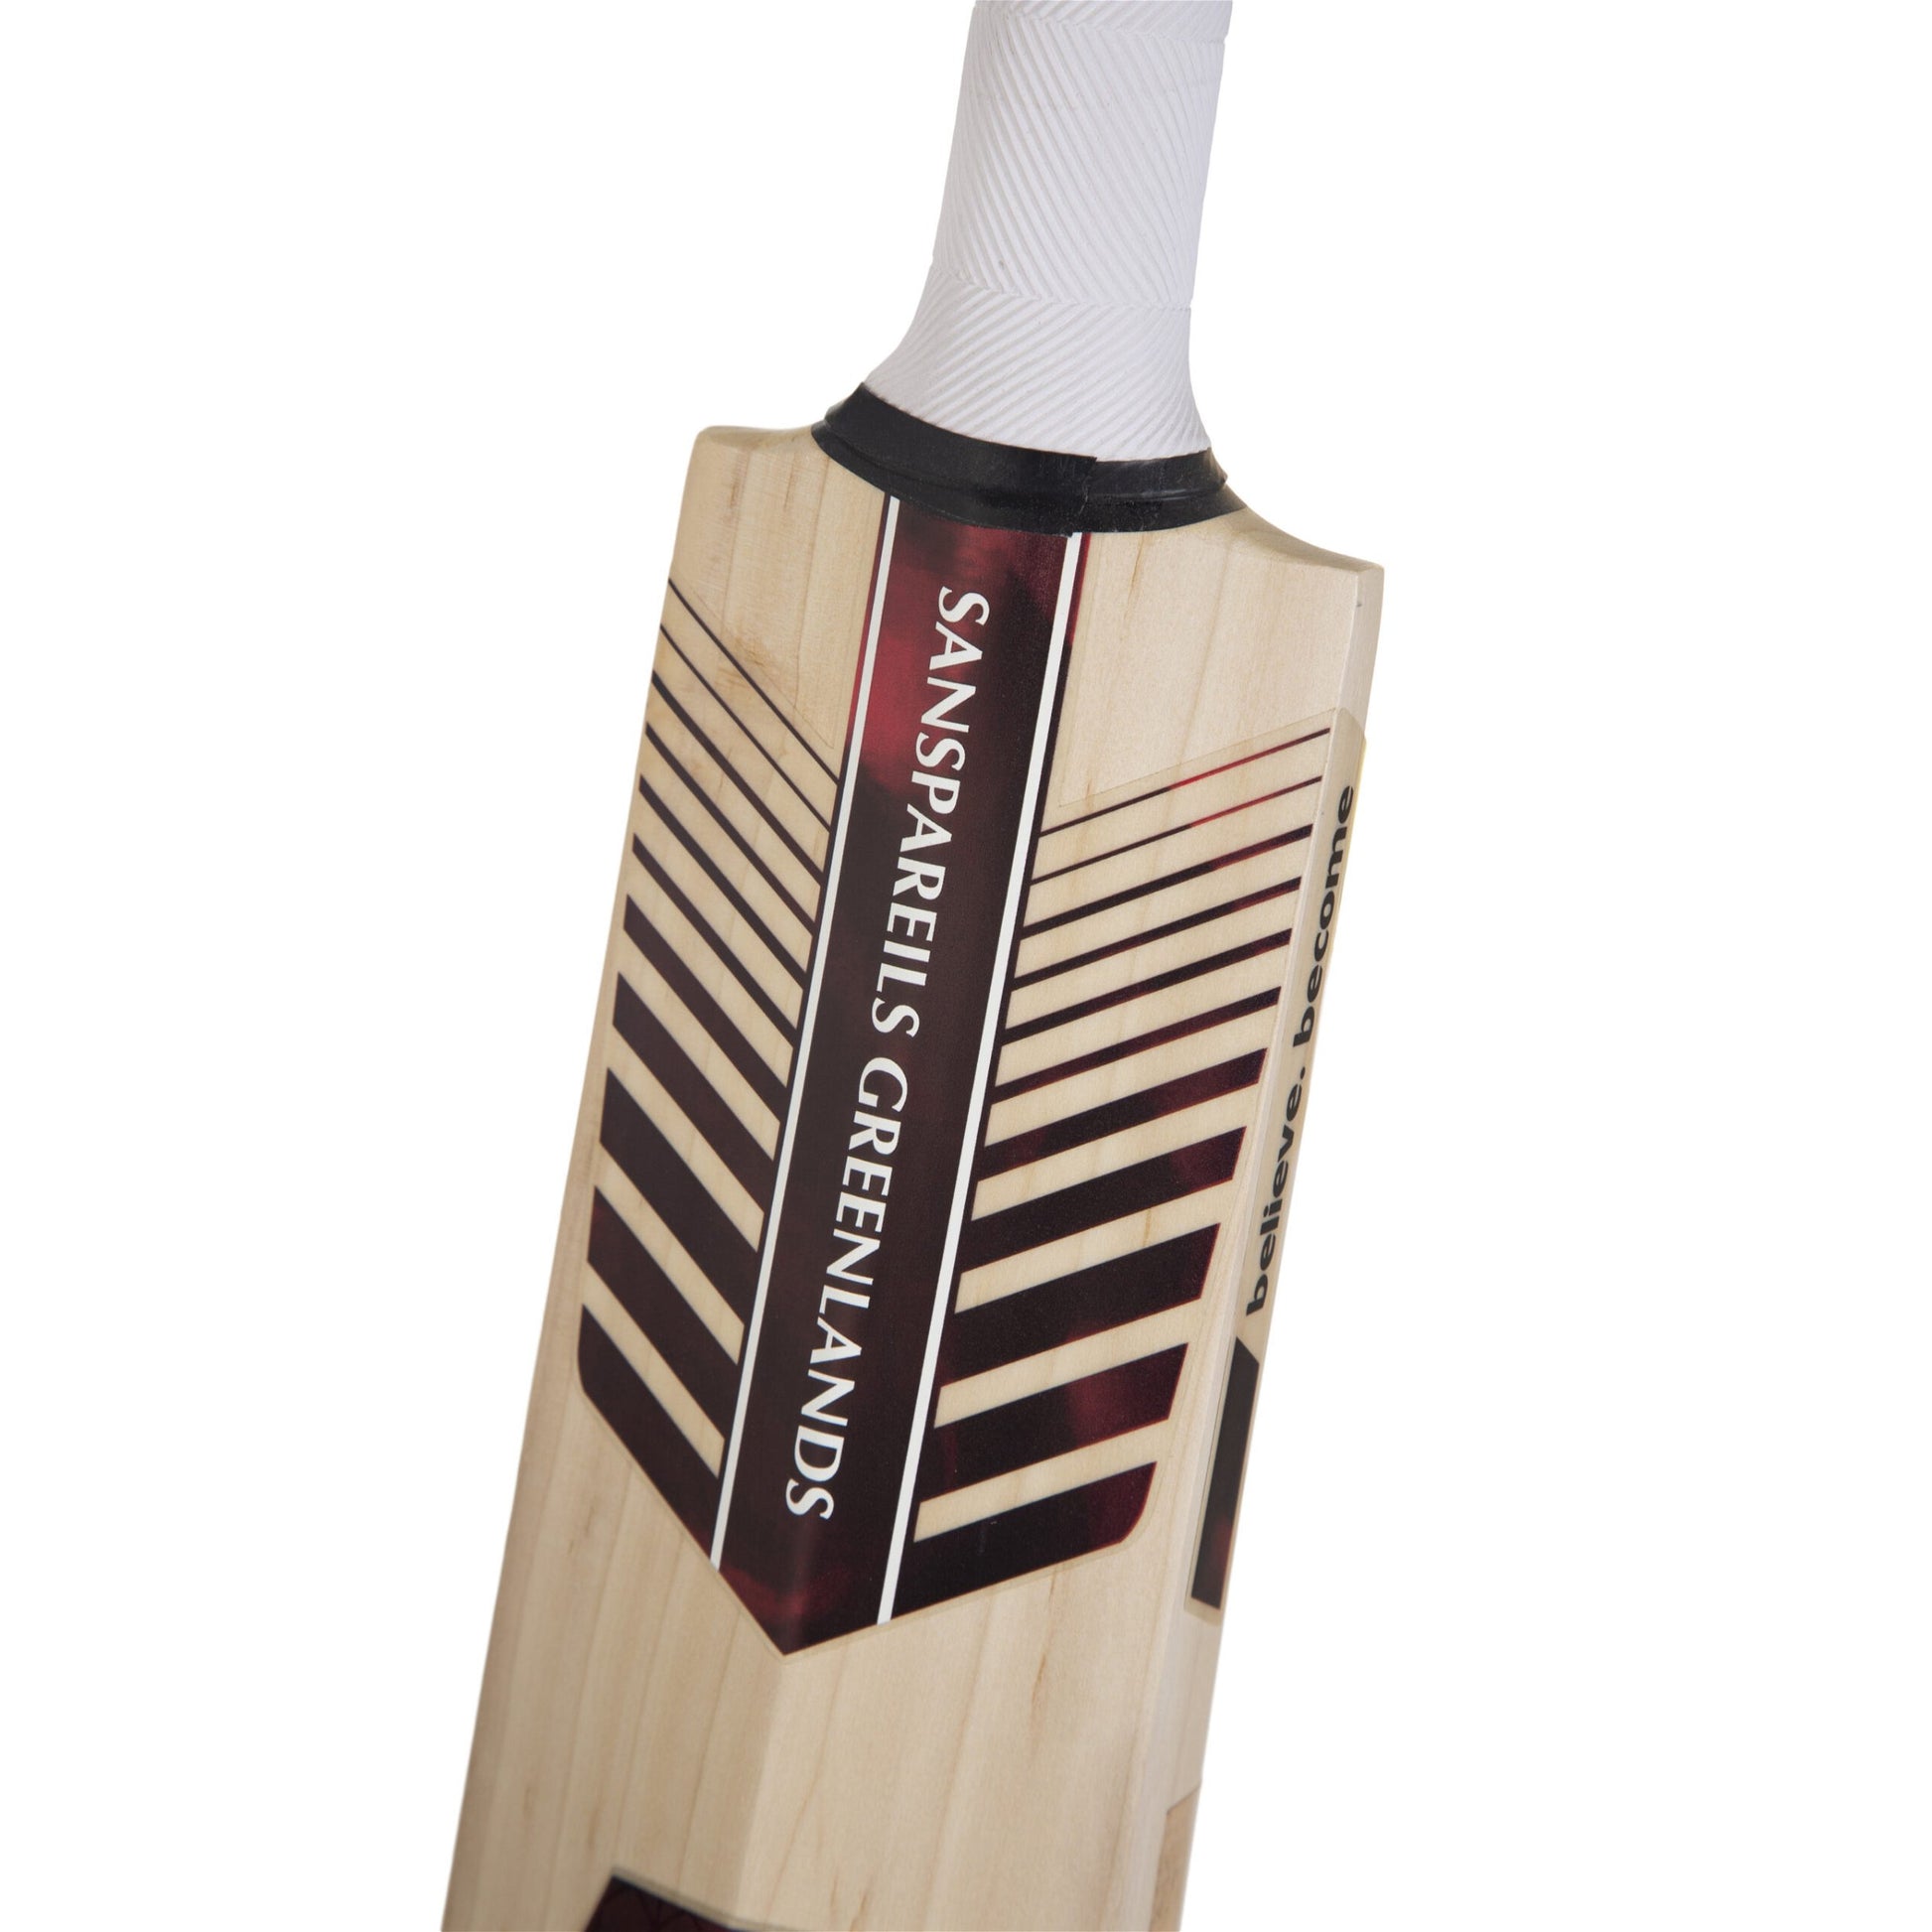 SG Maxstar Classic Traditionally Shaped English Willow grade 6 Cricket Bat (Leather Ball)